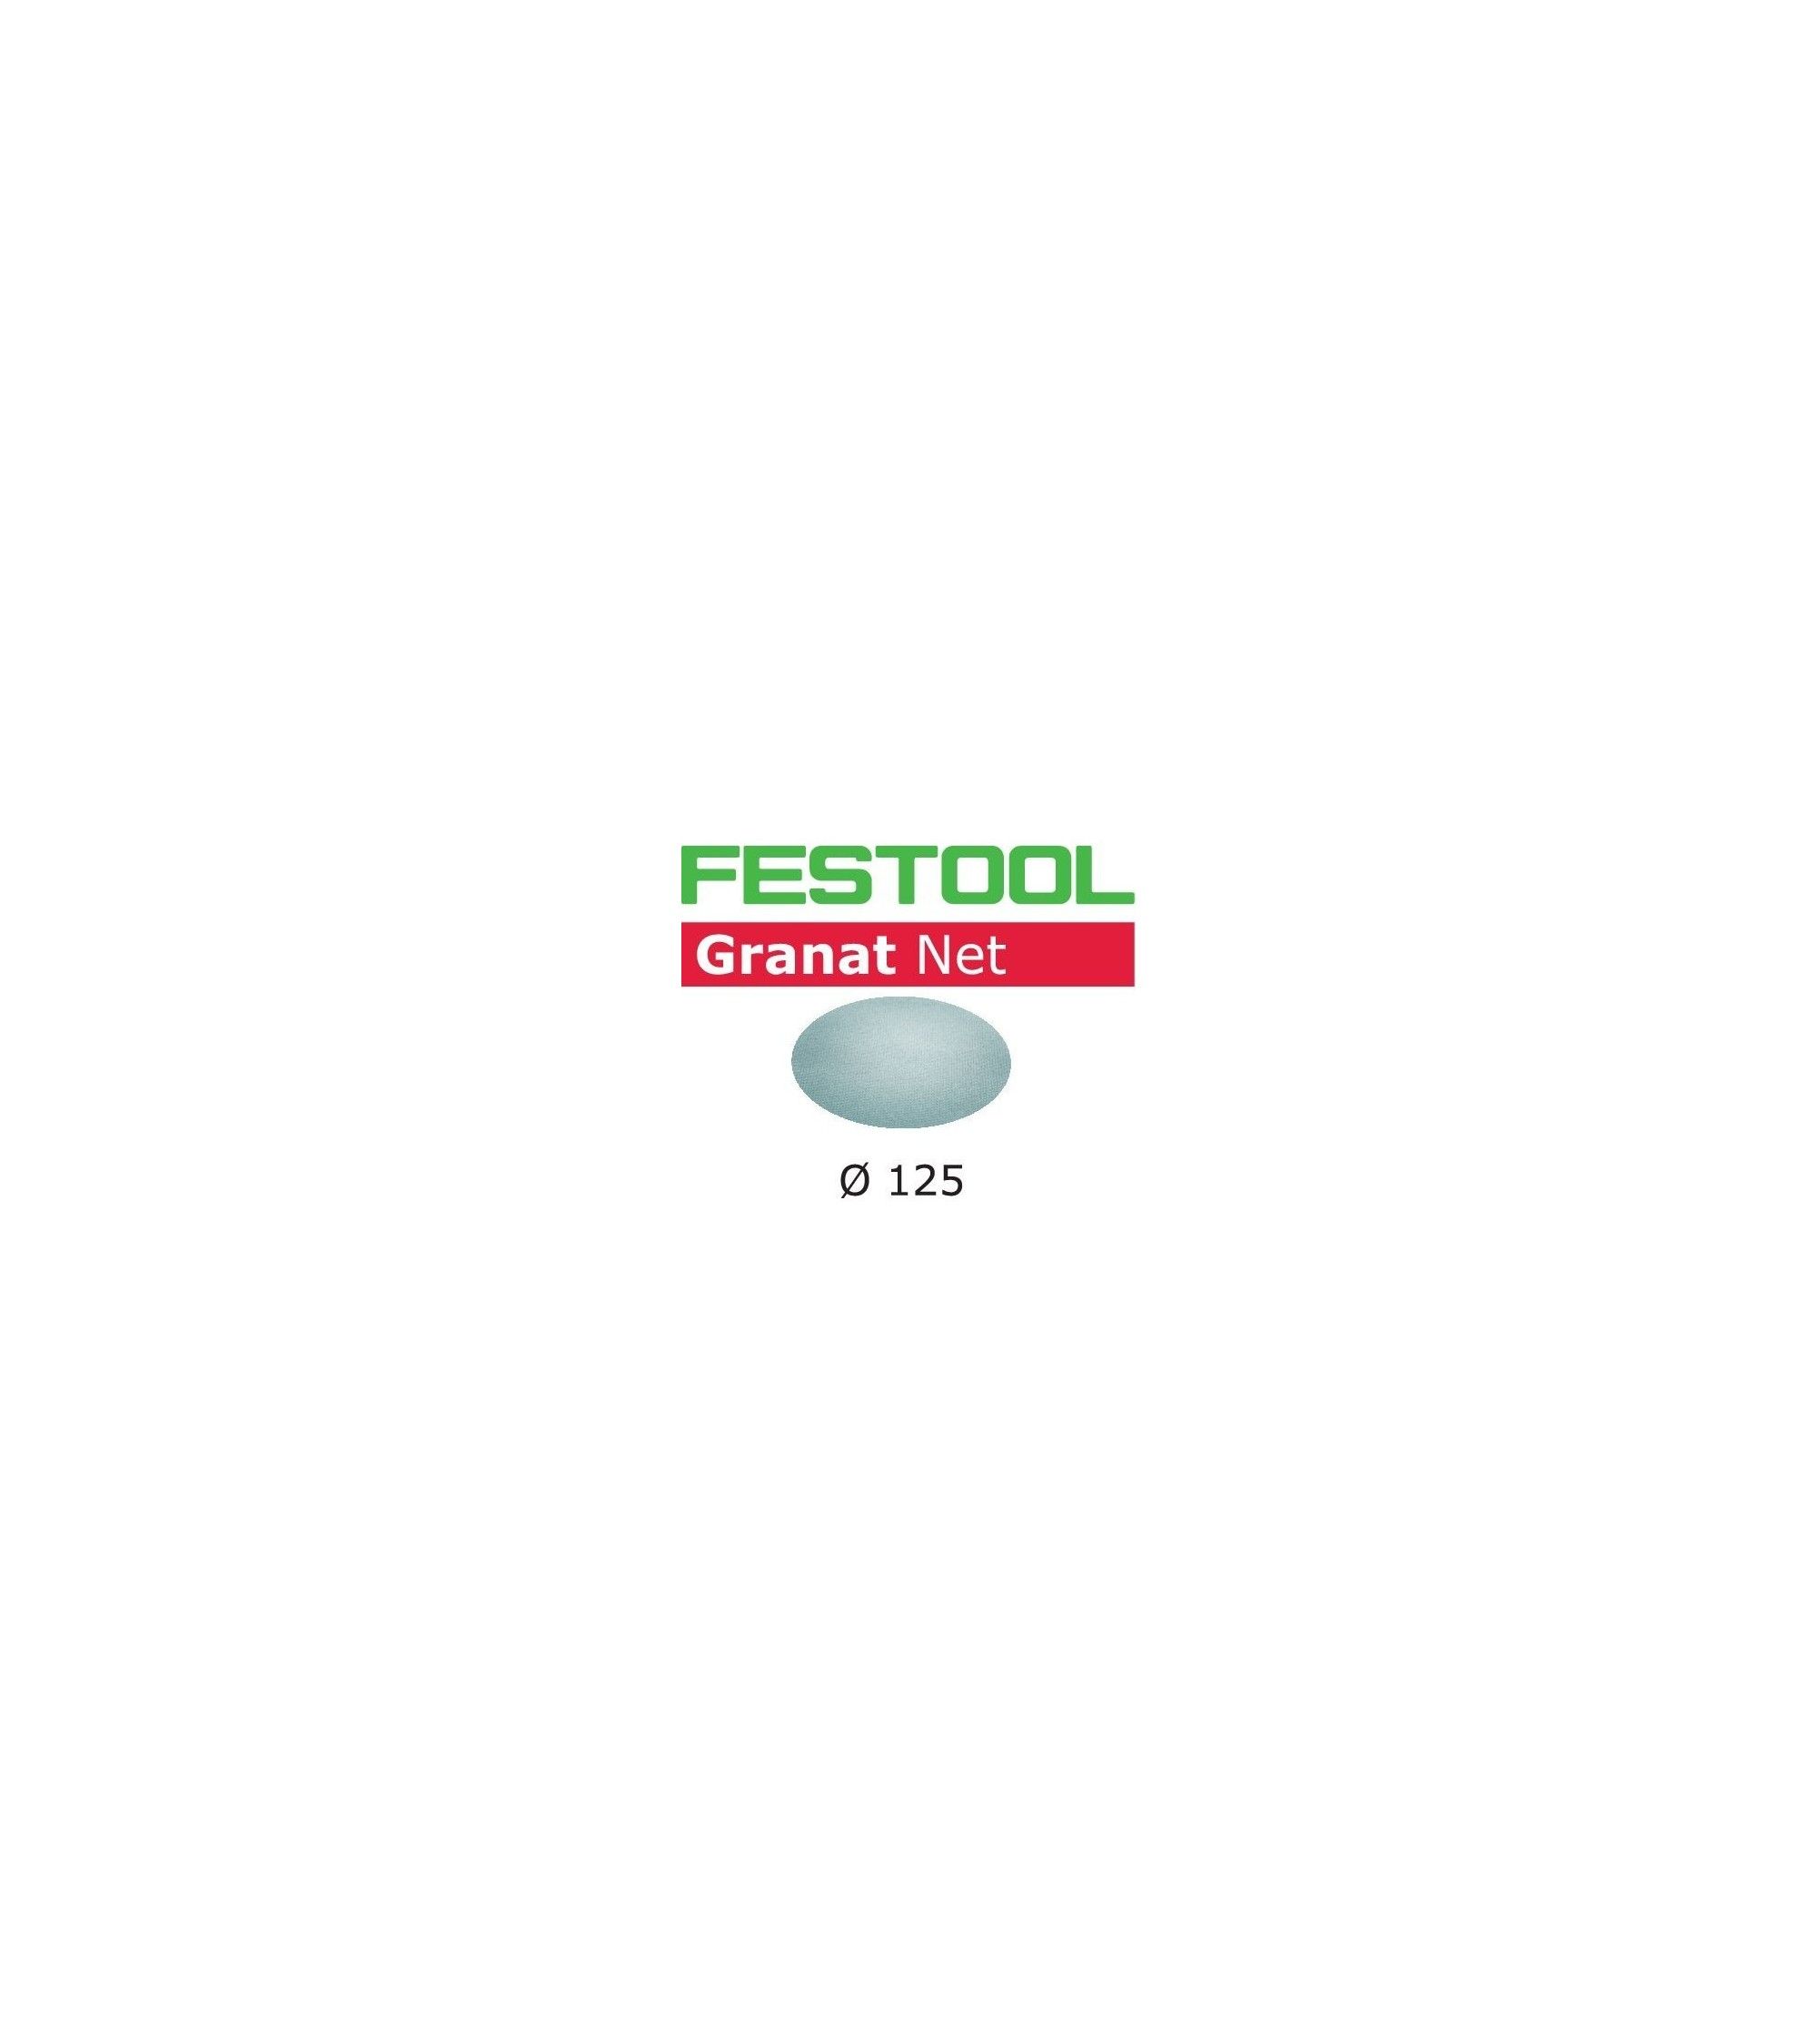 Festool Abrasive net STF D125 P240 GR NET/50 Granat Net, KAINA BE PVM: 54.81, KODAS: 203300 | 001